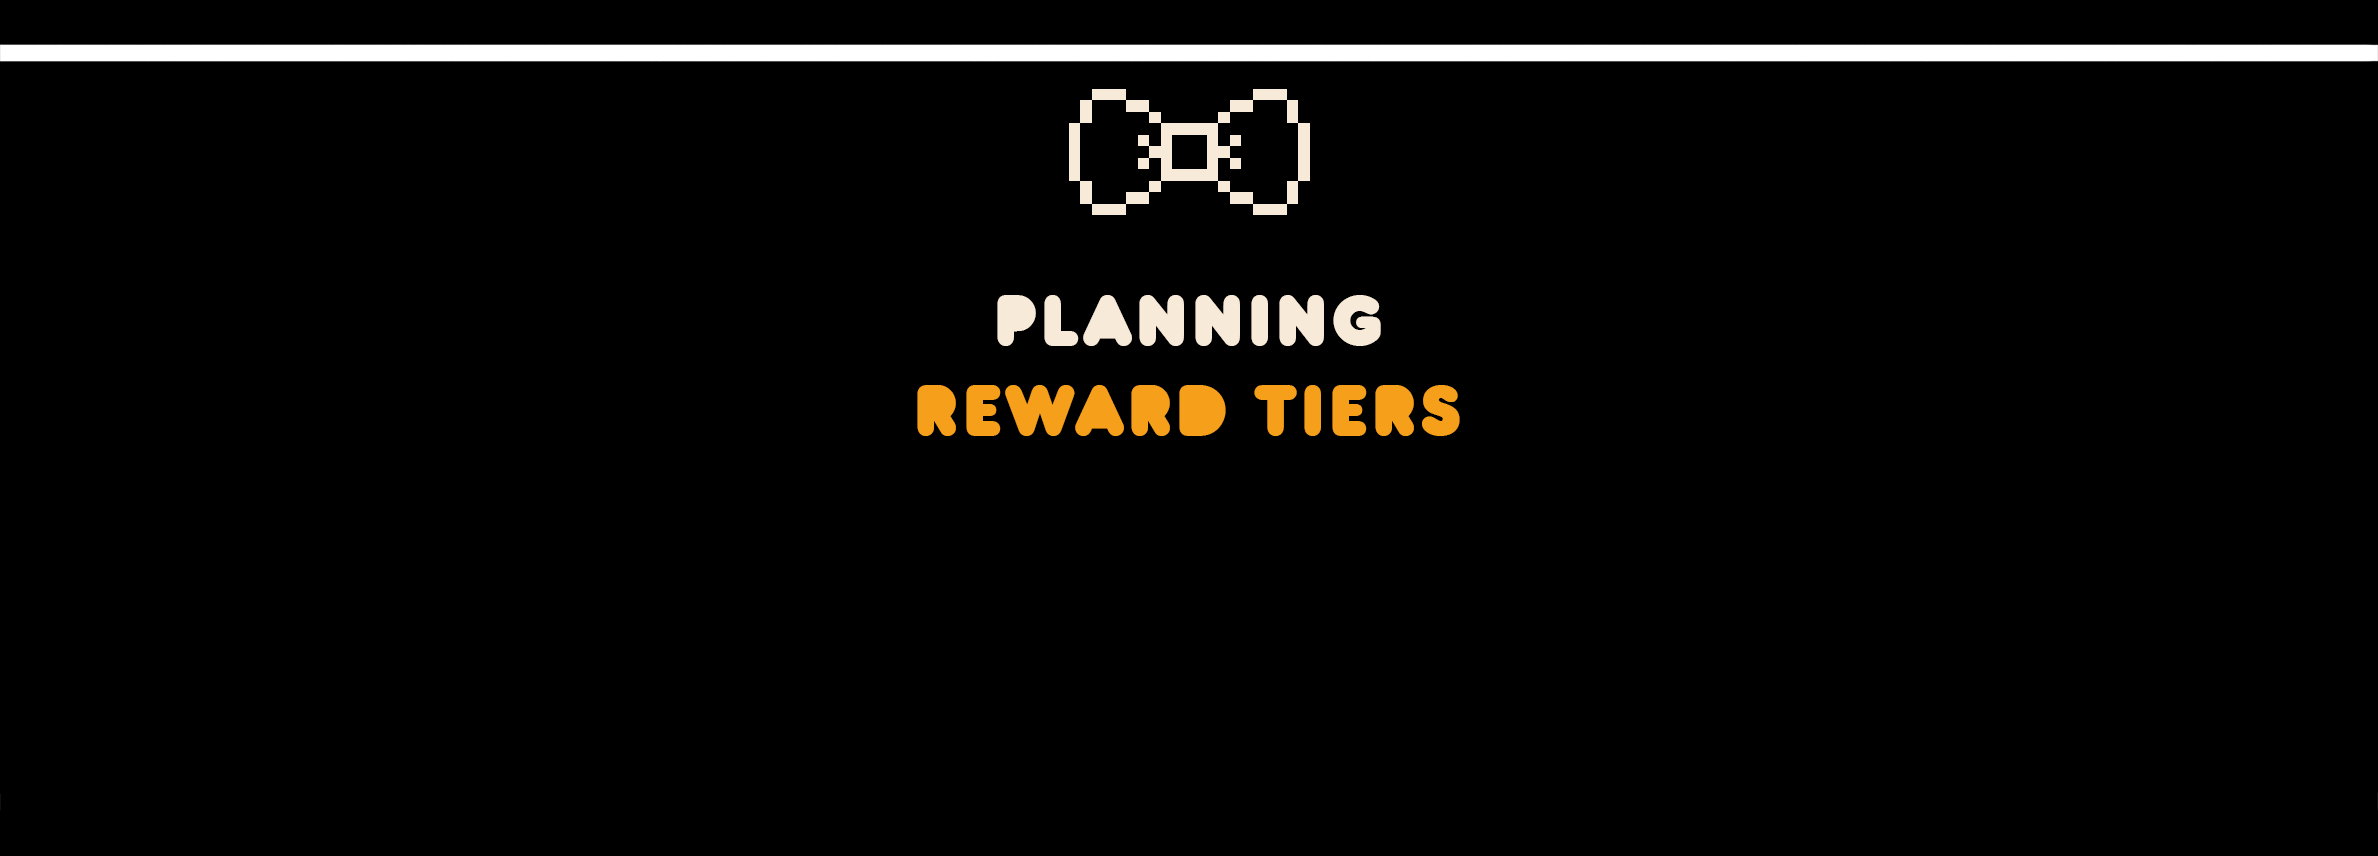 How to Plan Reward Tiers on Kickstarter